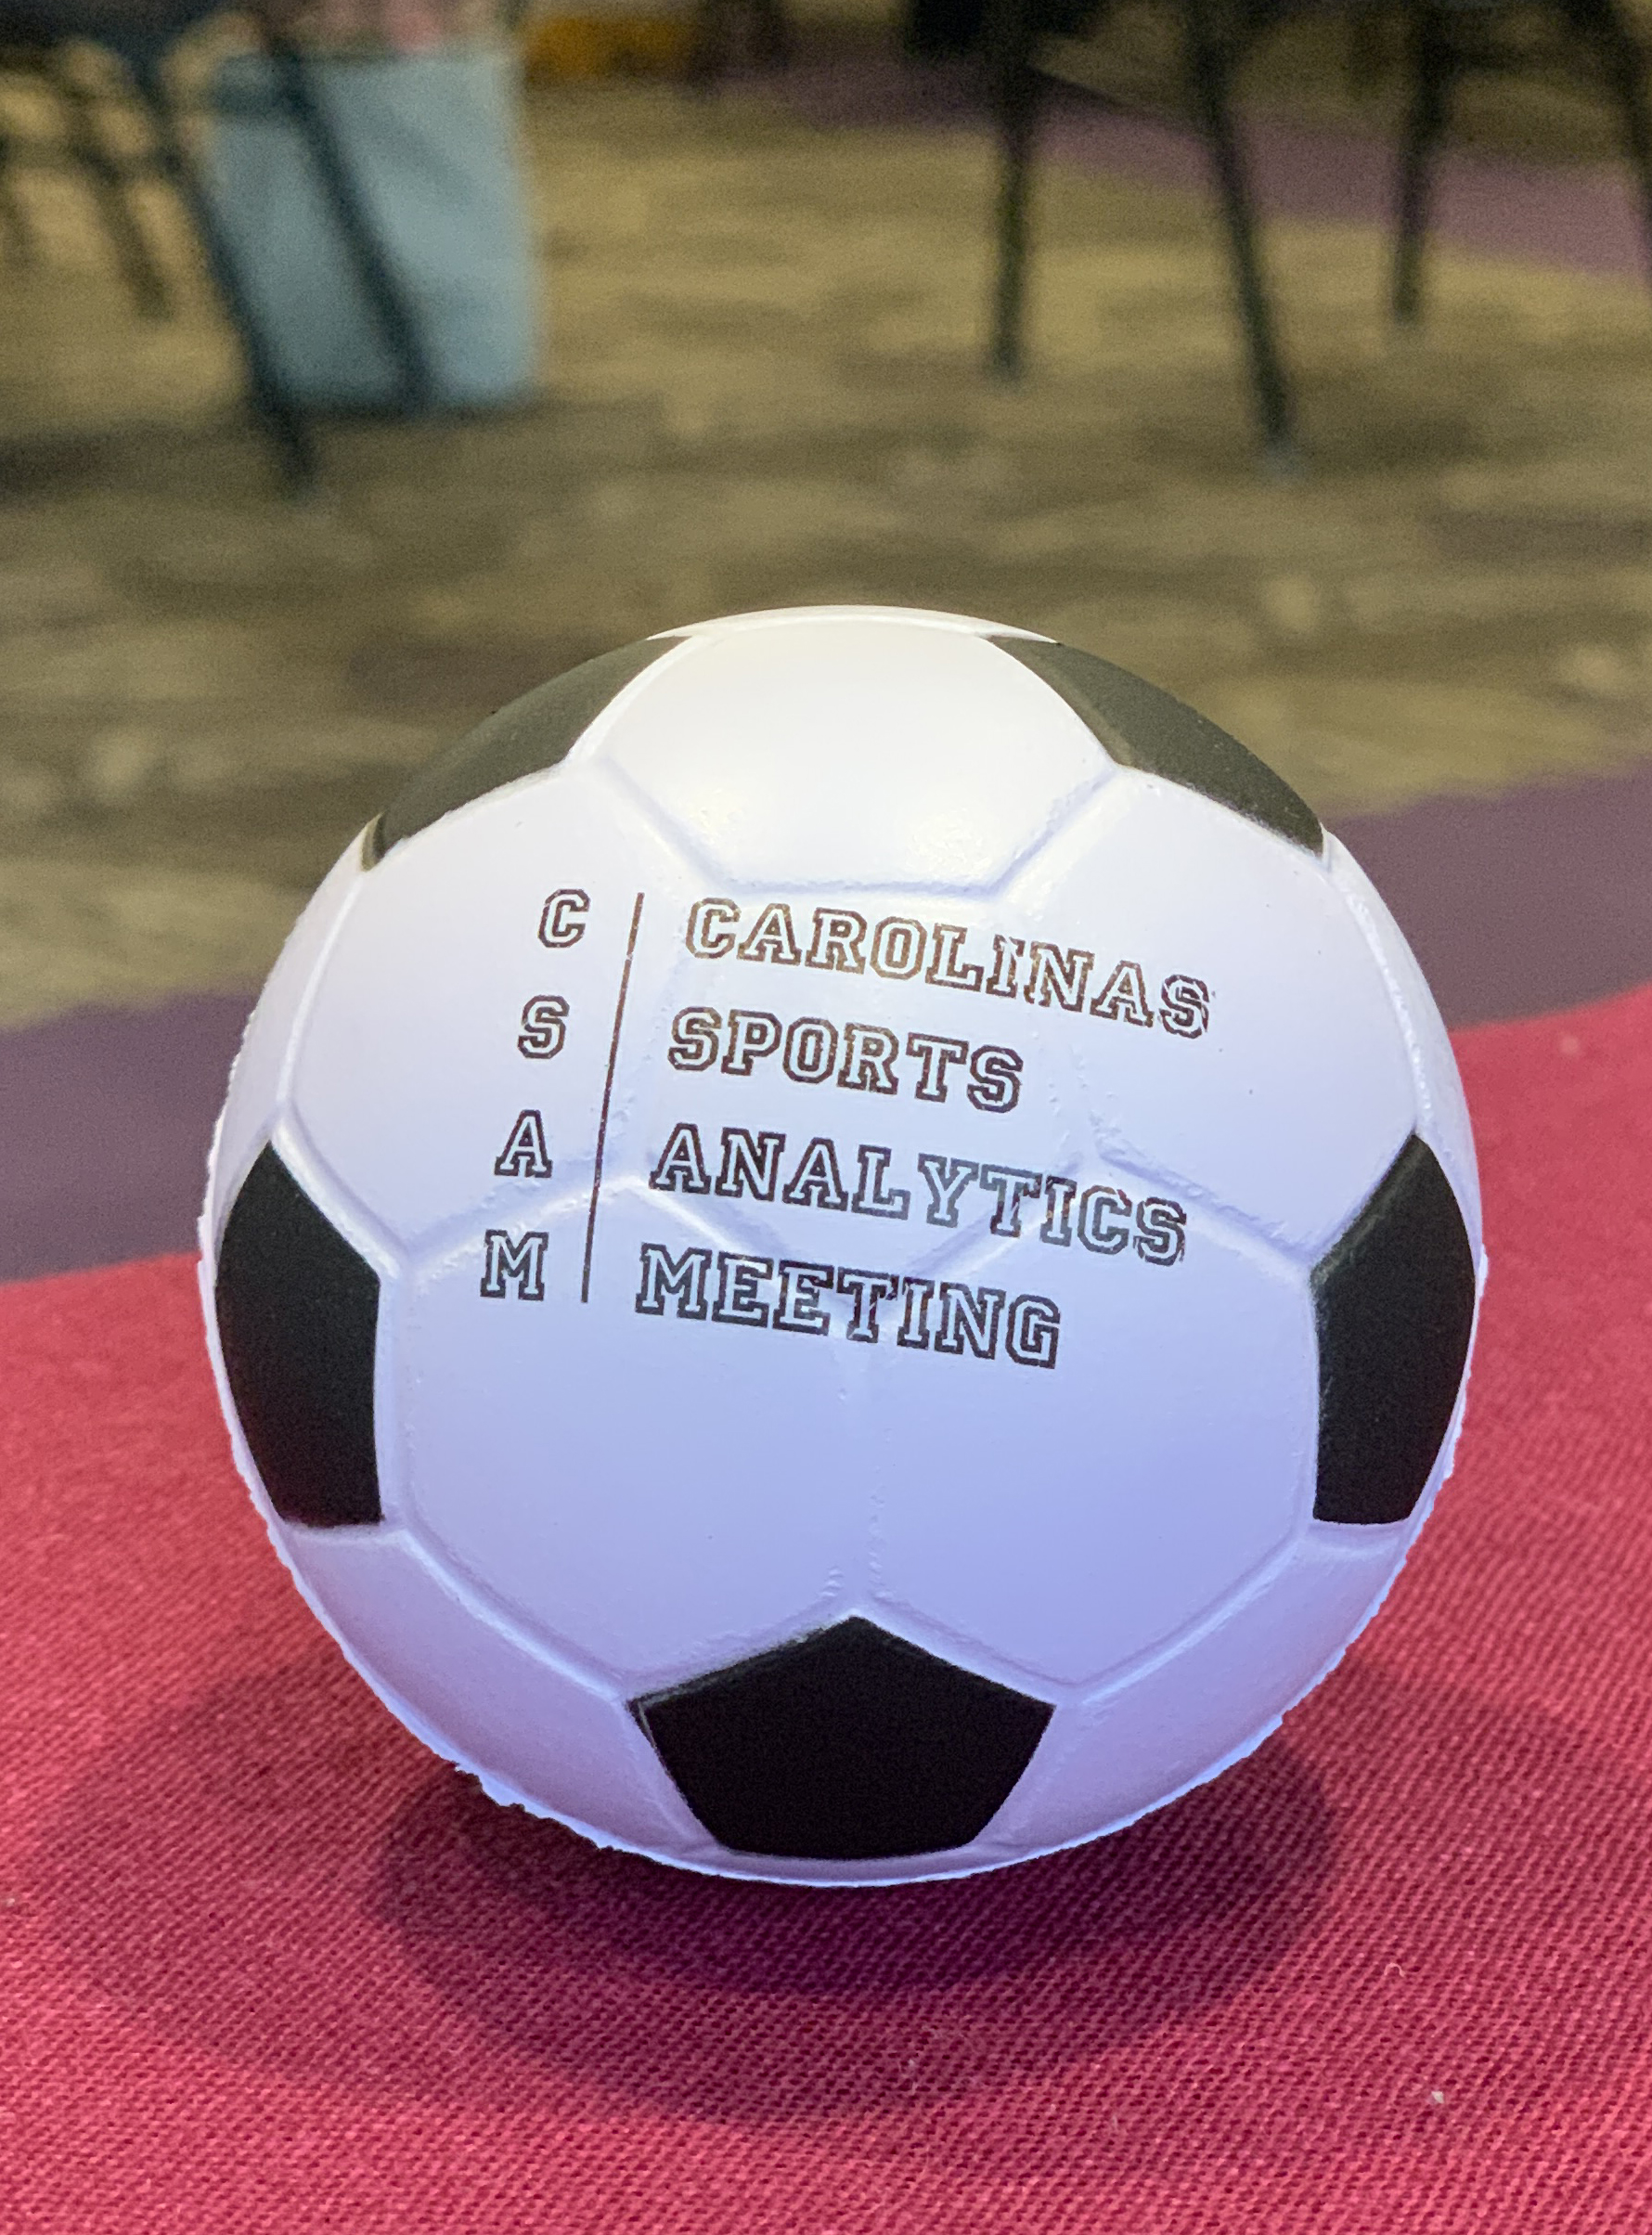 A soccer ball featuring the Carolinas Sports Analytics Meeting logo